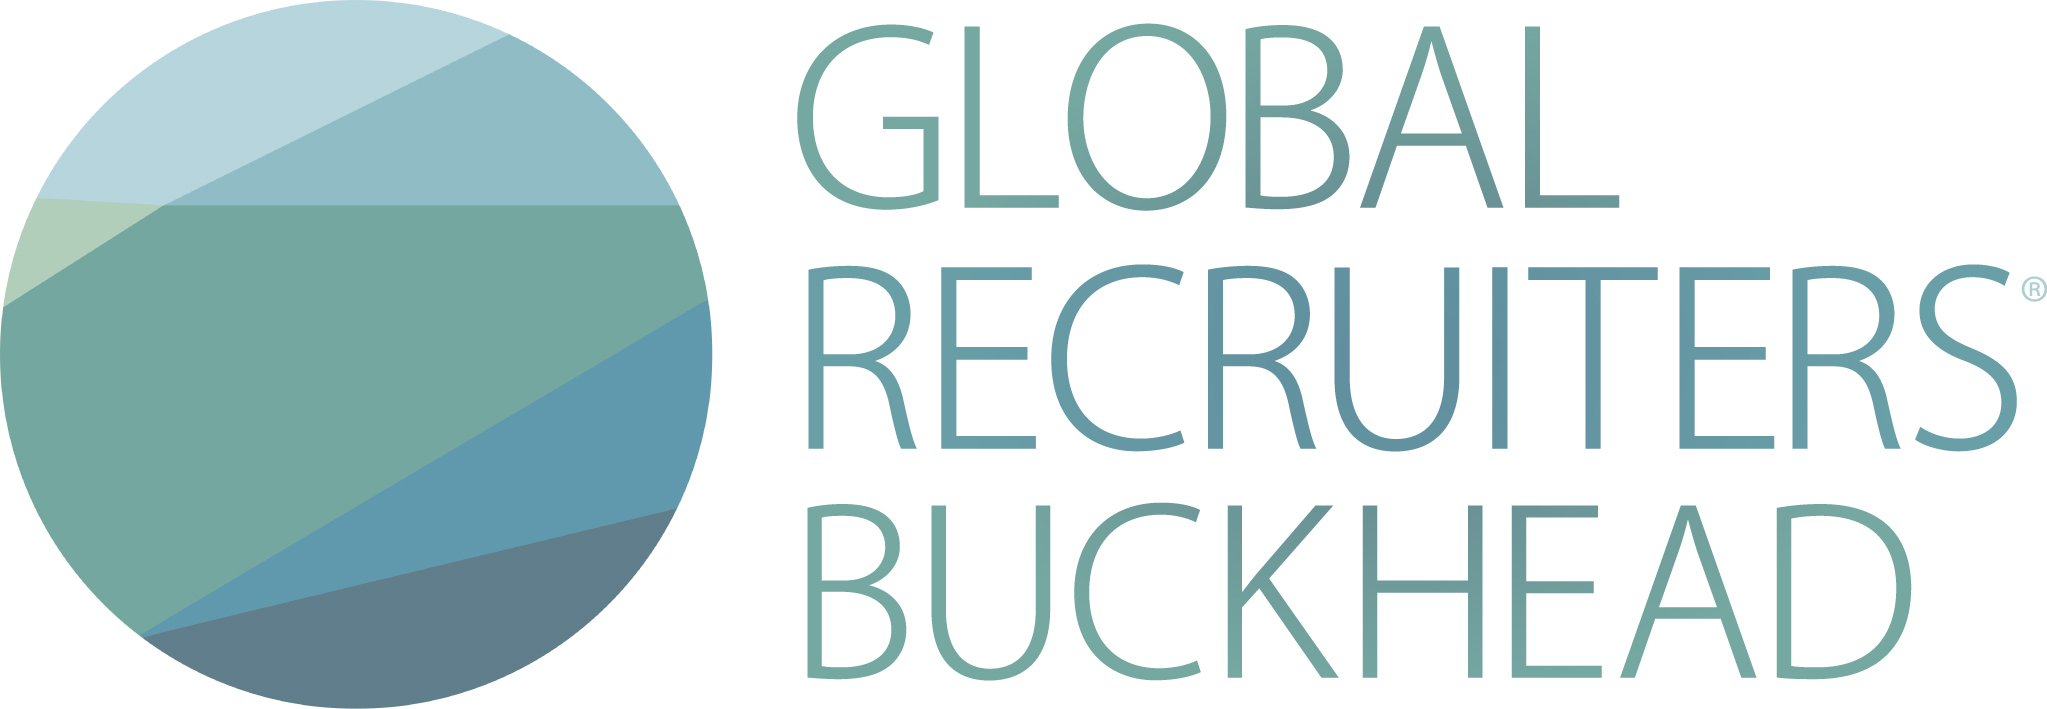 Global Recruiters of Buckhead